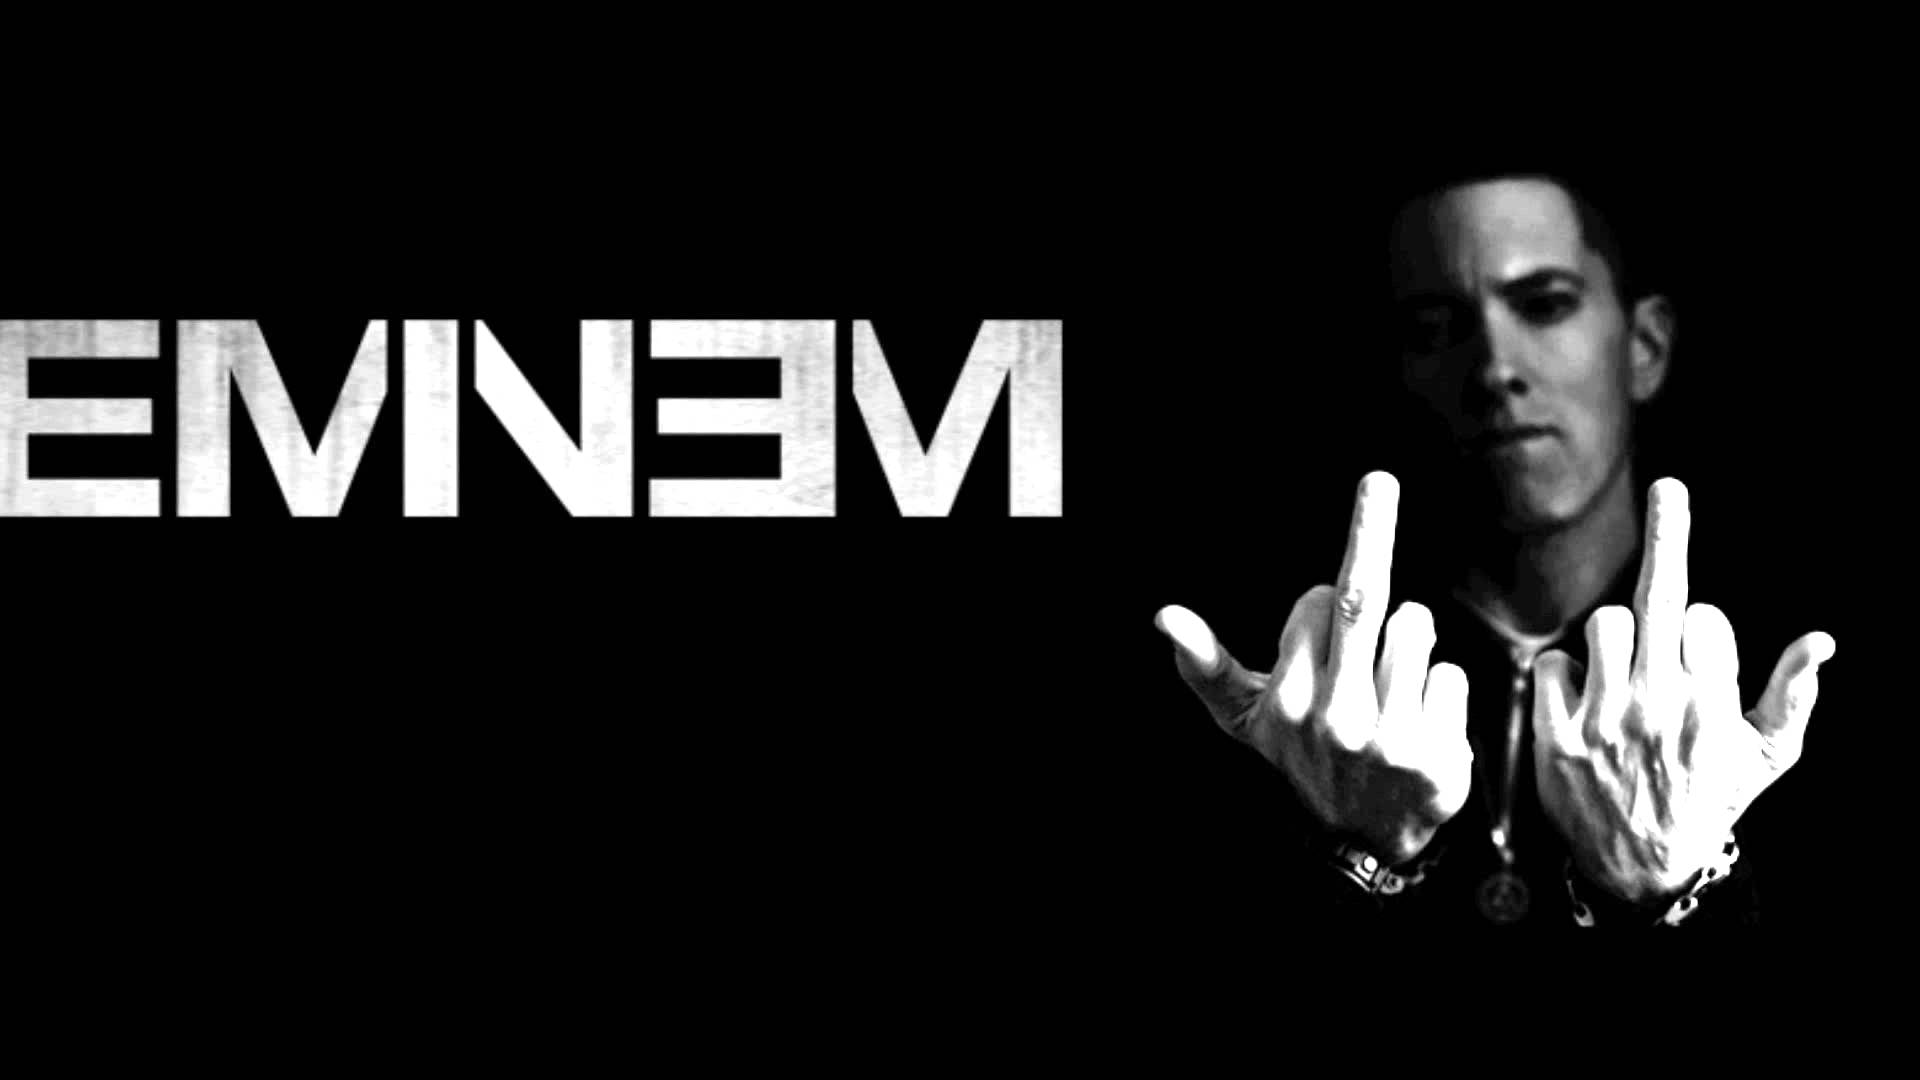 Free download Eminem Phone Wallpapers Top Free Eminem Phone Backgrounds  [1920x1080] for your Desktop, Mobile & Tablet | Explore 23+ Eminem Wallpaper  2017 | Eminem Wallpapers, Eminem Wallpaper, Eminem Backgrounds